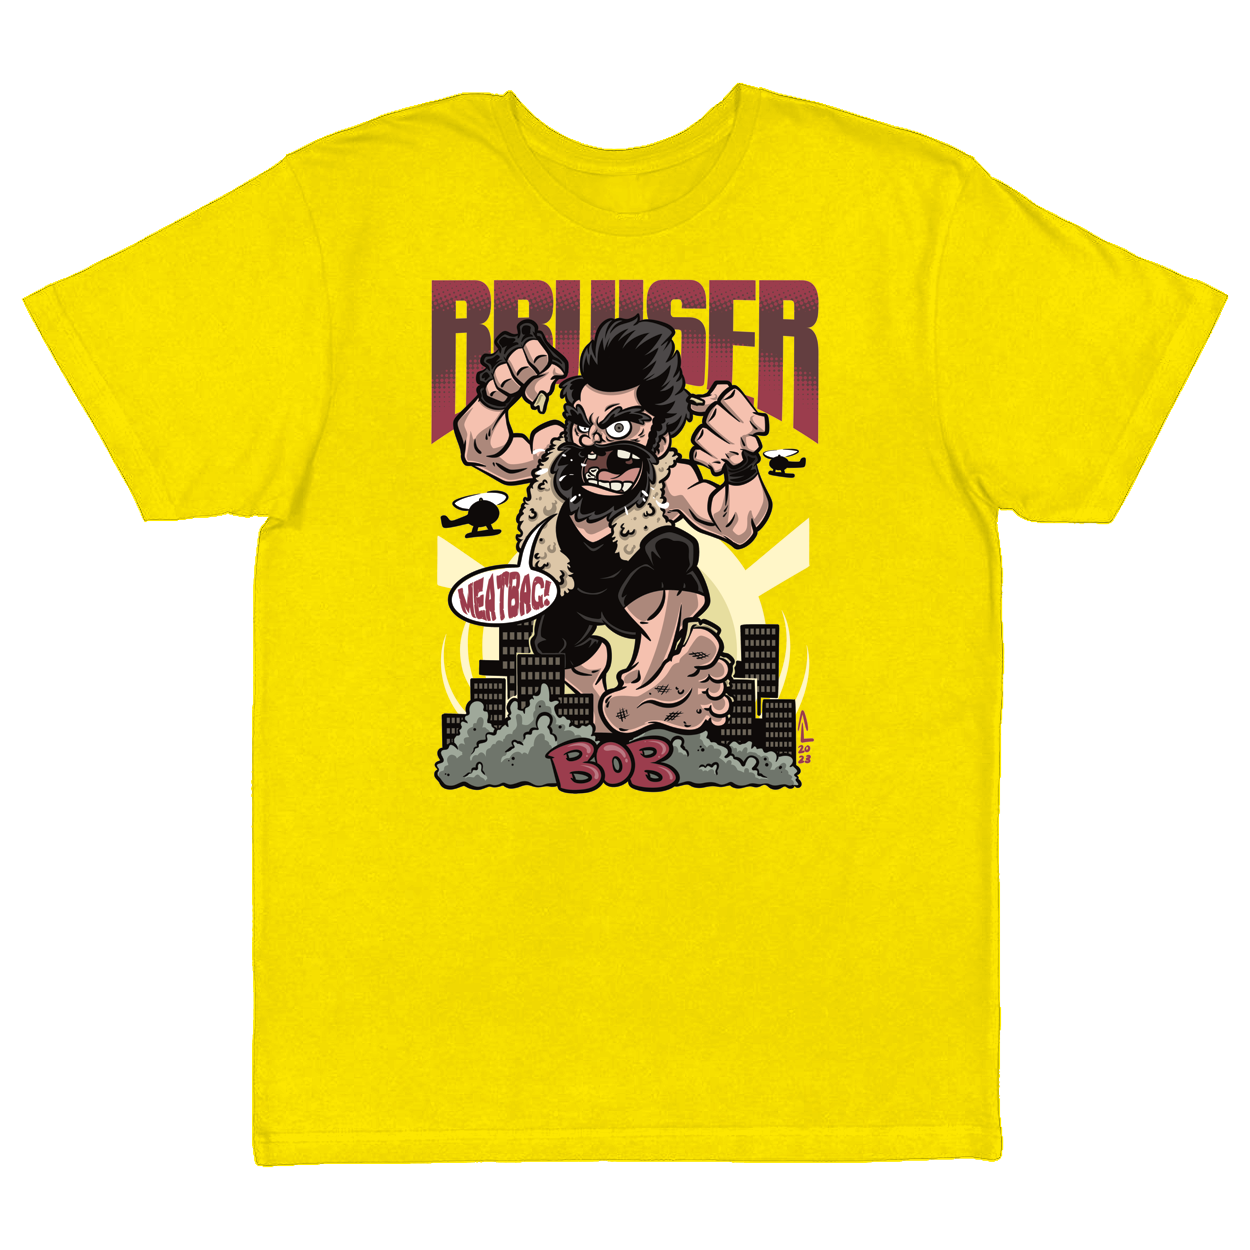 Monster Bob (T-Shirt)